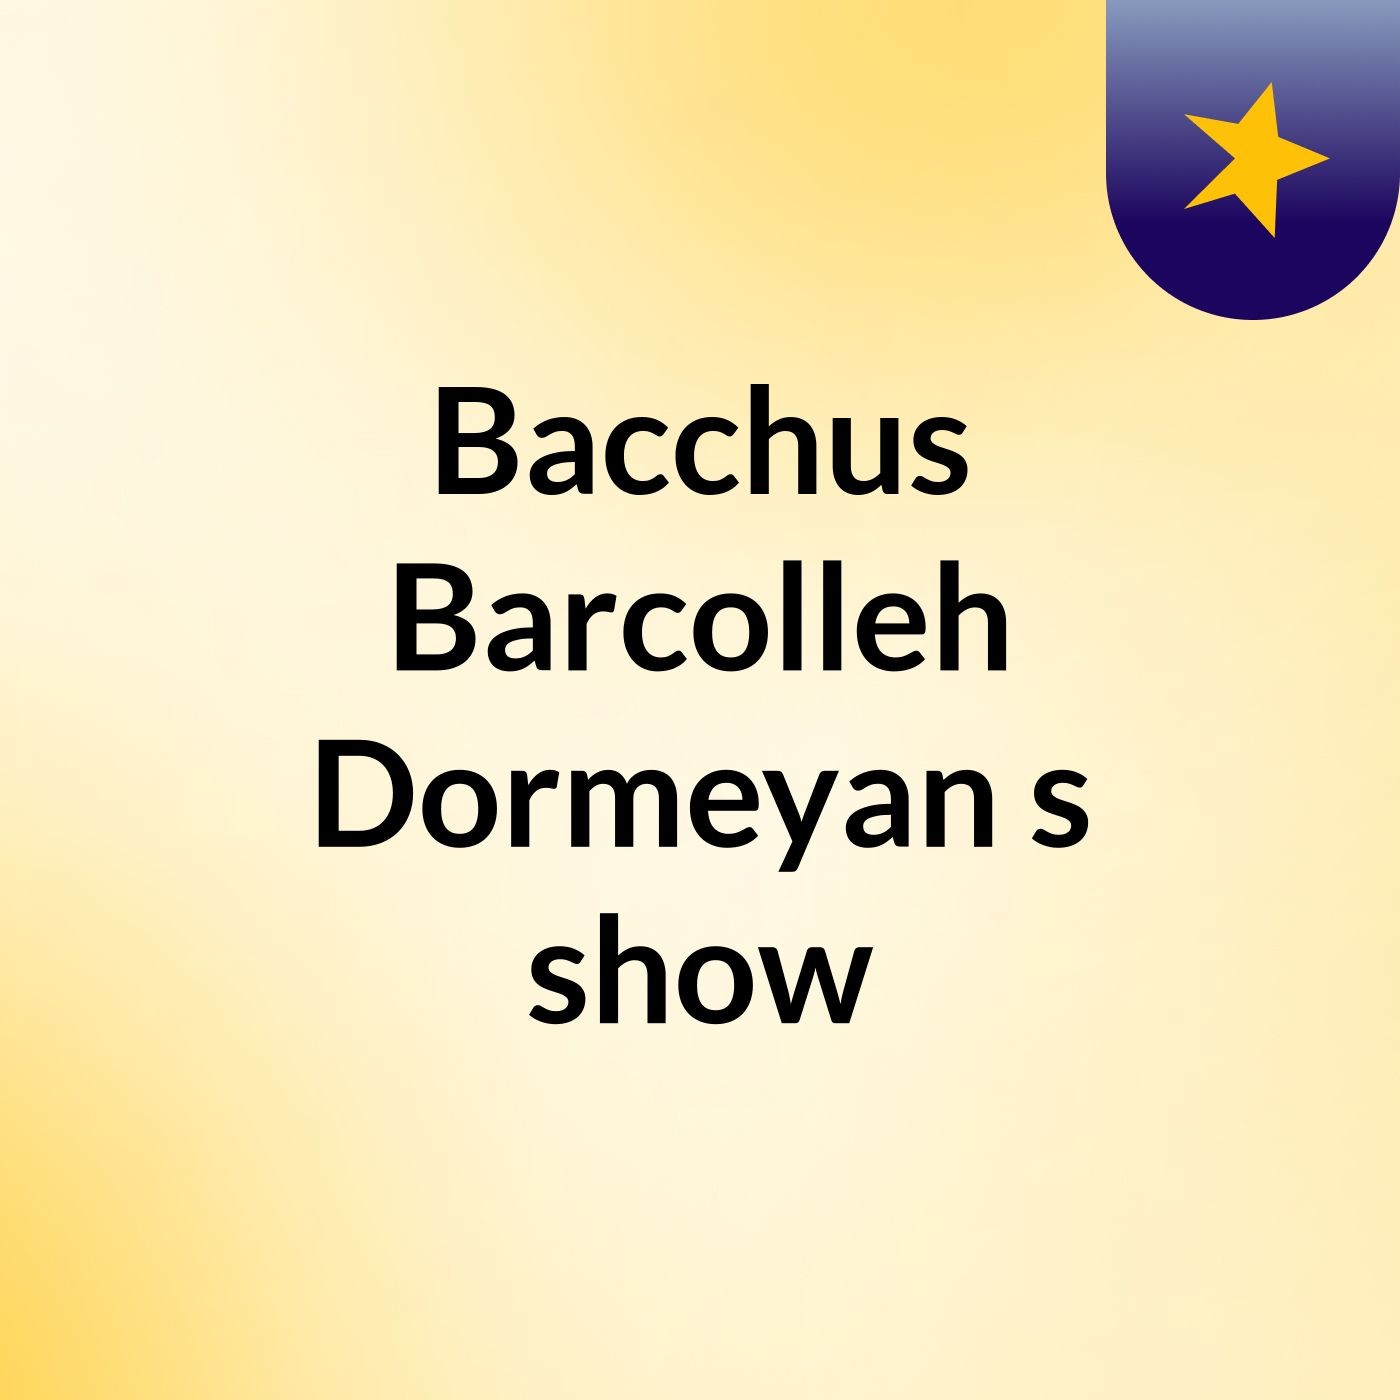 Episode 3 - Bacchus Barcolleh Dormeyan's show